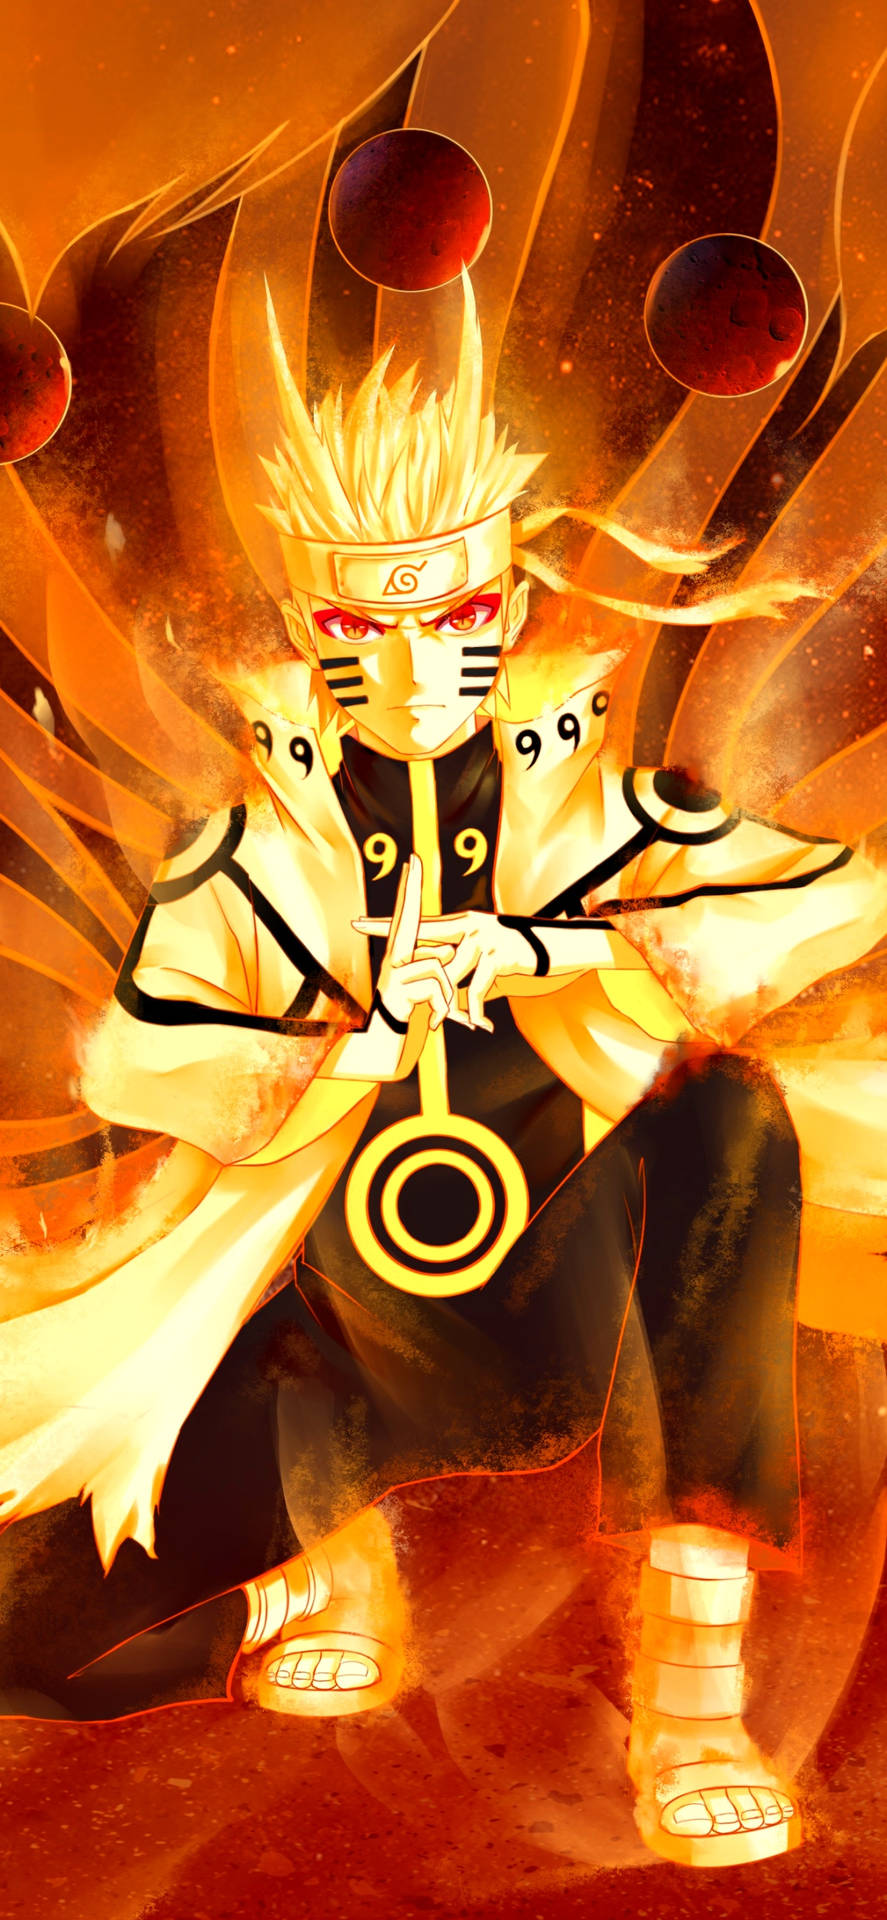 Vis din flammende ånd med en gul Naruto tapet. Wallpaper